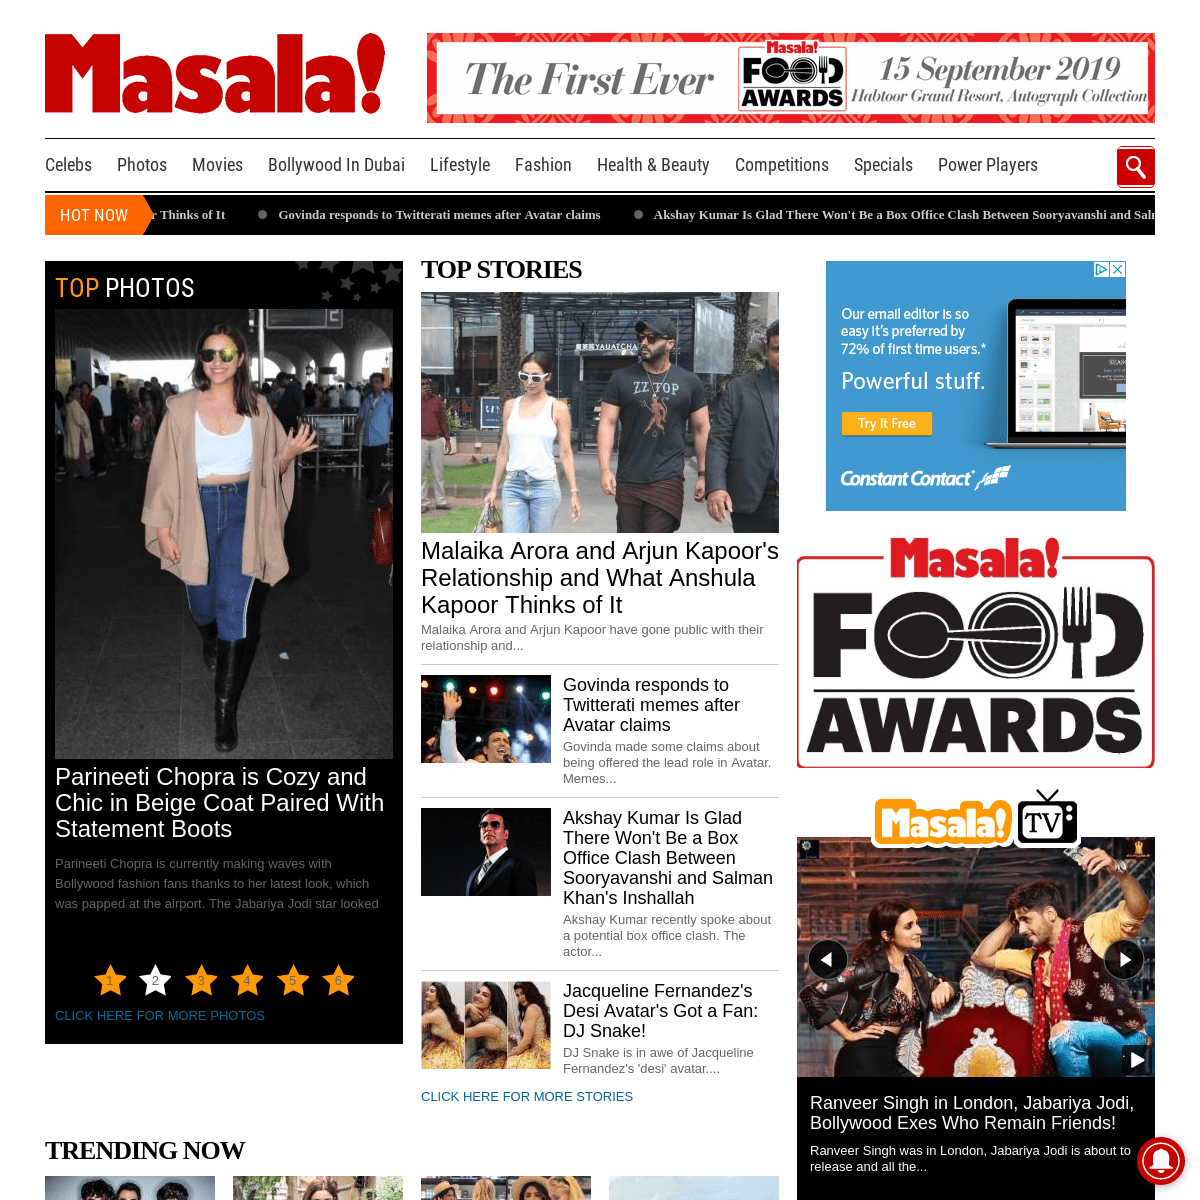 Masala! - Bollywood Gossip, News, Photos, Celeb Fashion, Movie Reviews, Desi Weddings